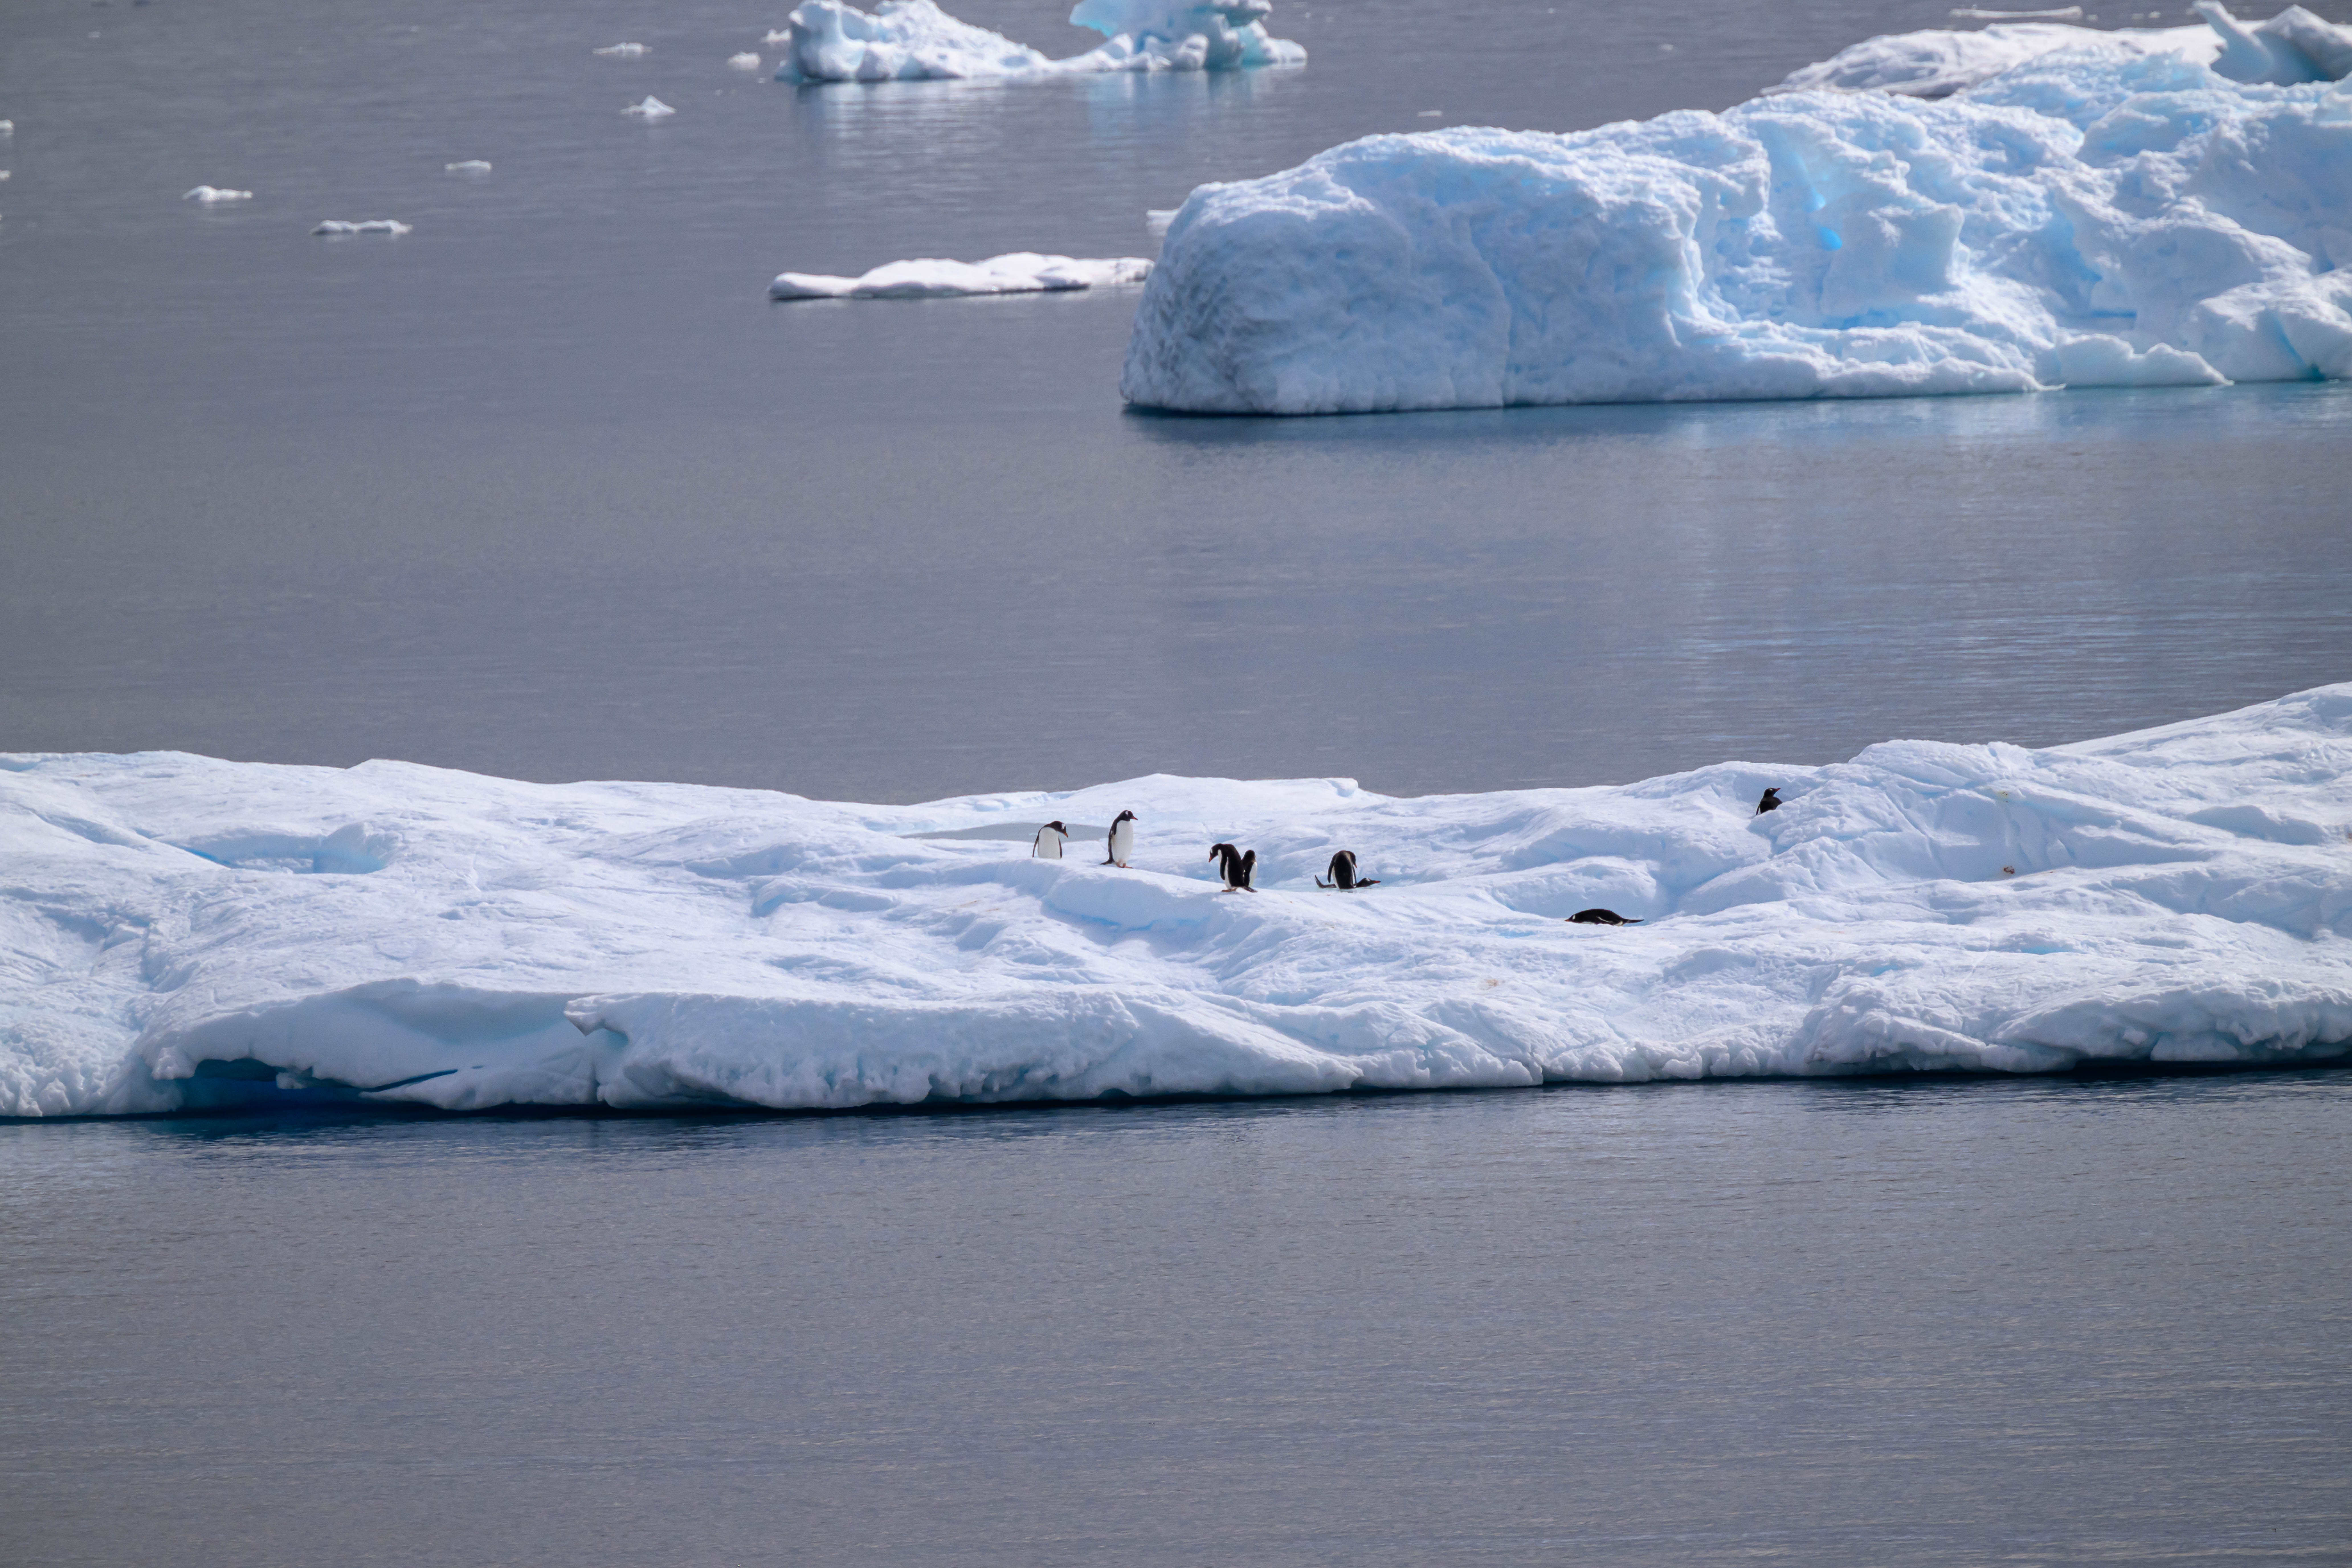 Penguins Sunbathing on their private Island